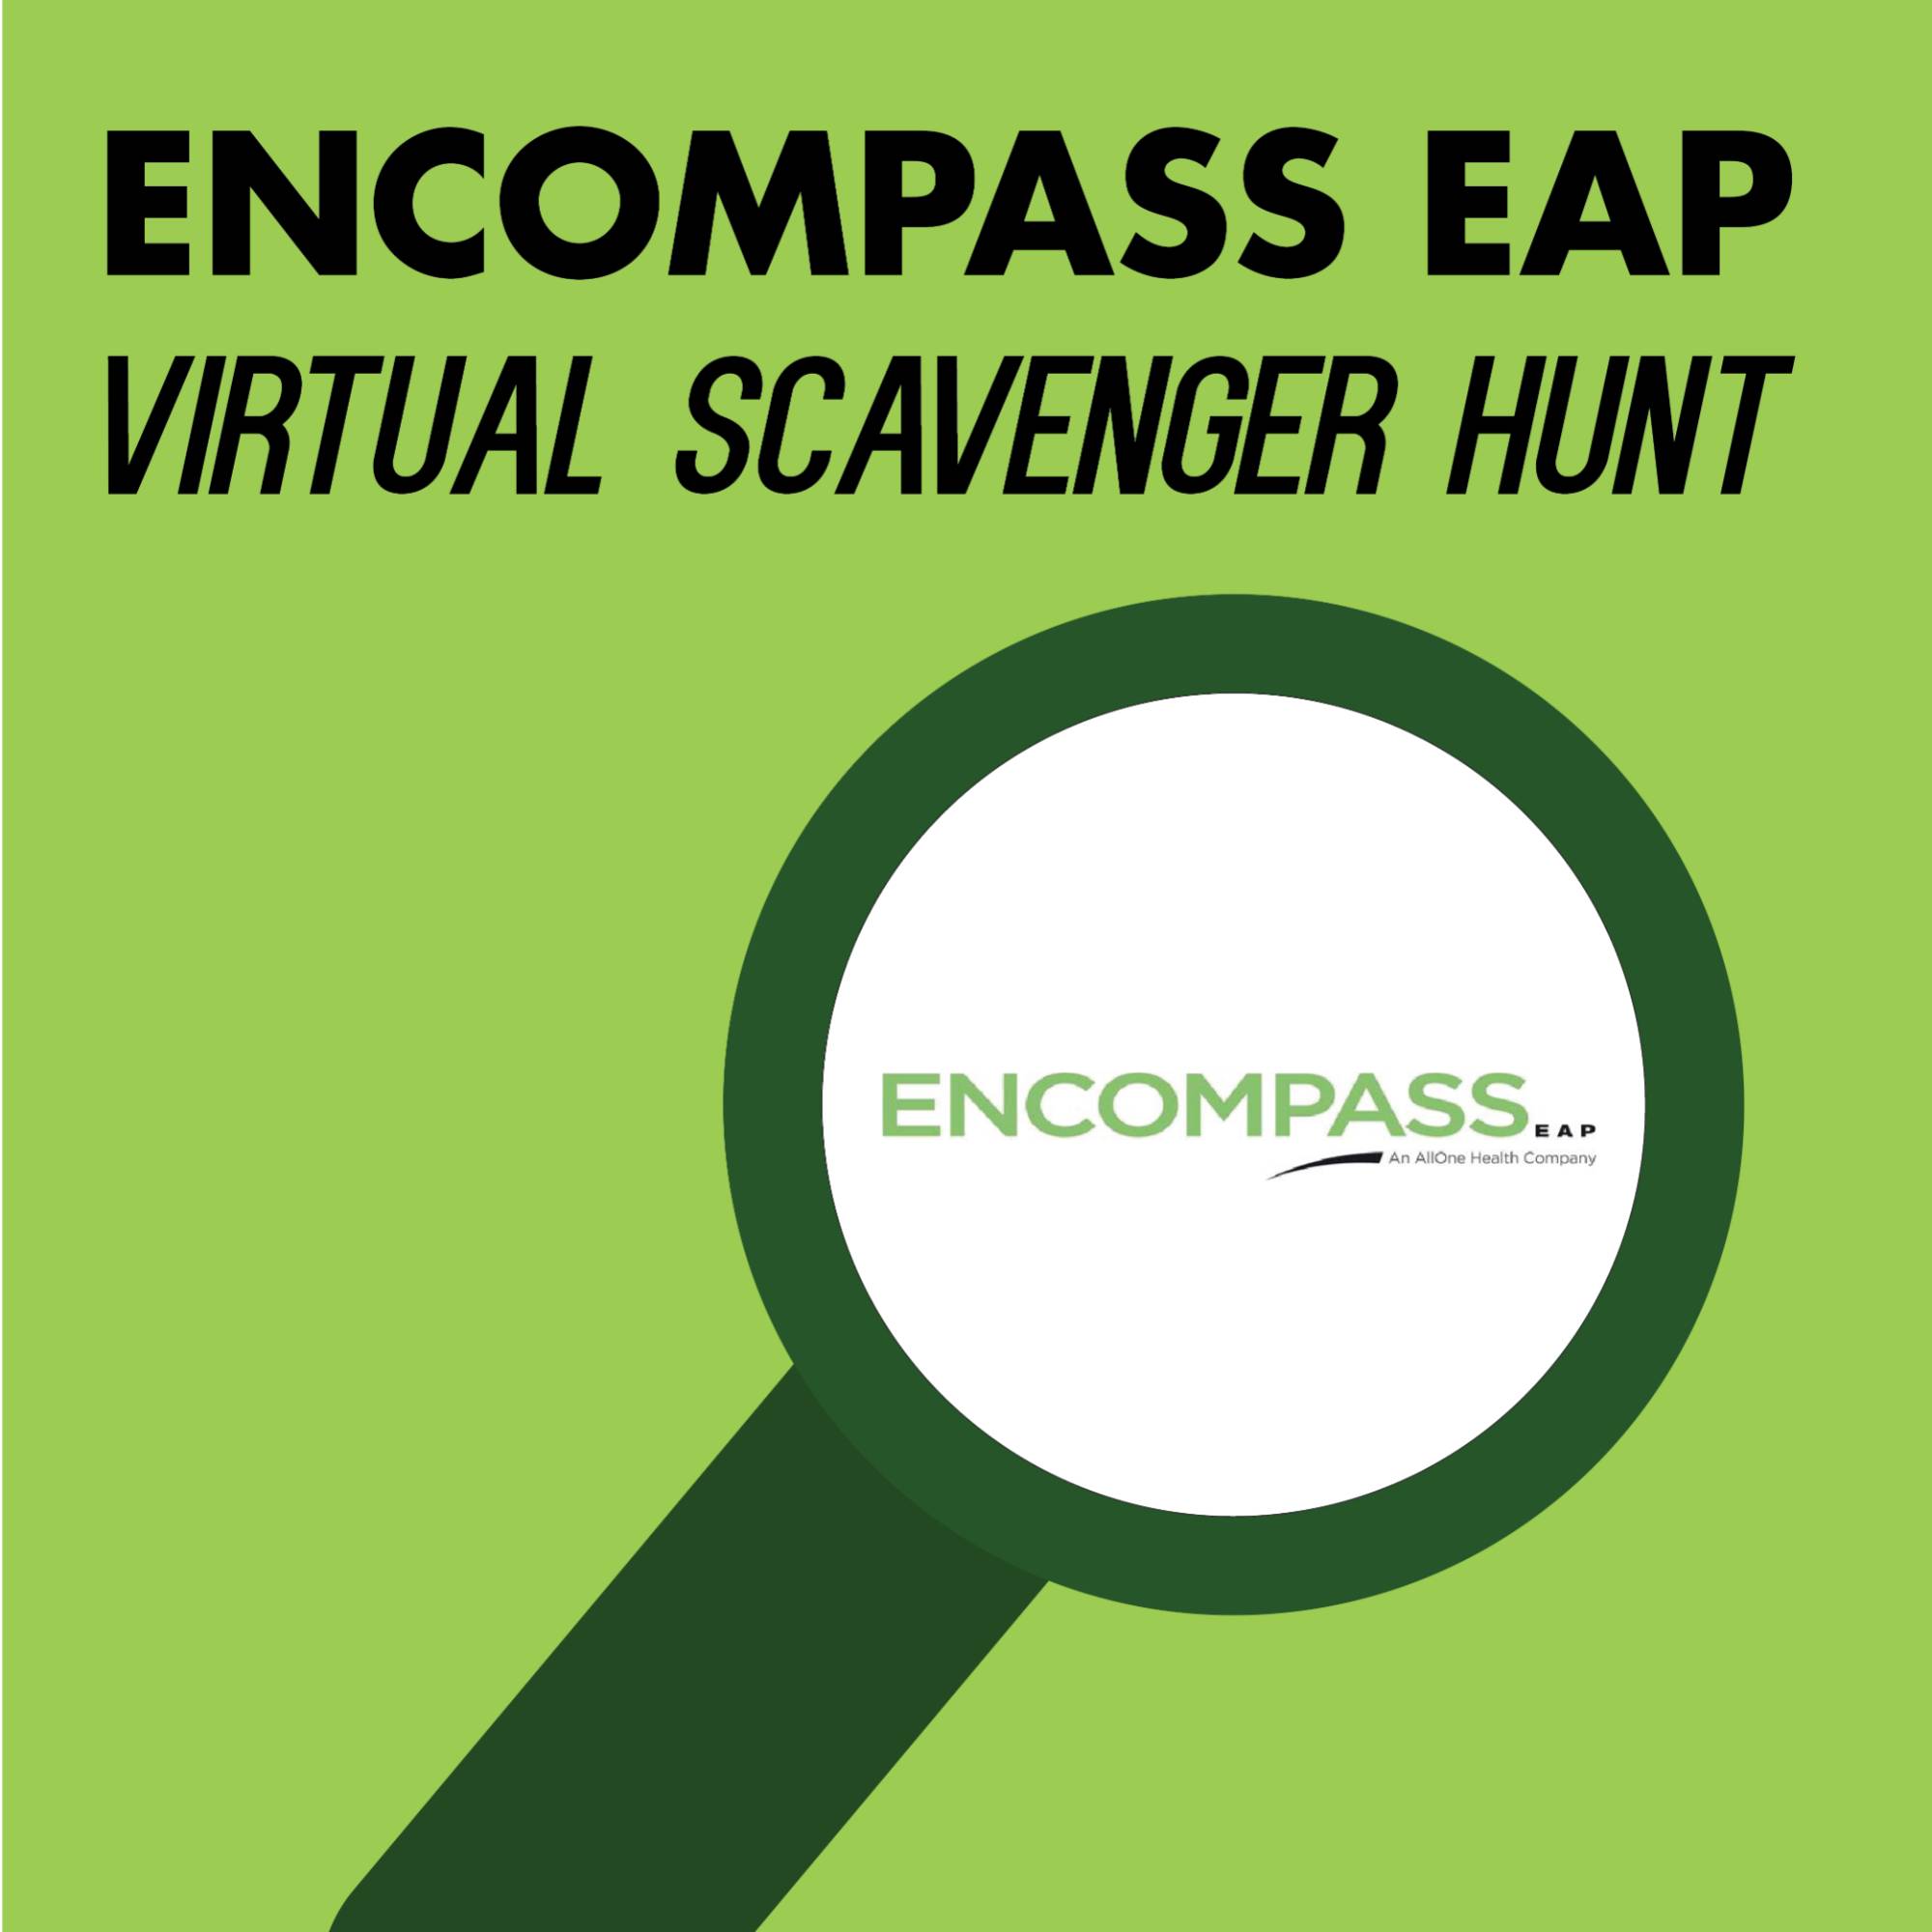 Encompass EAP Fall Scavenger Hunt